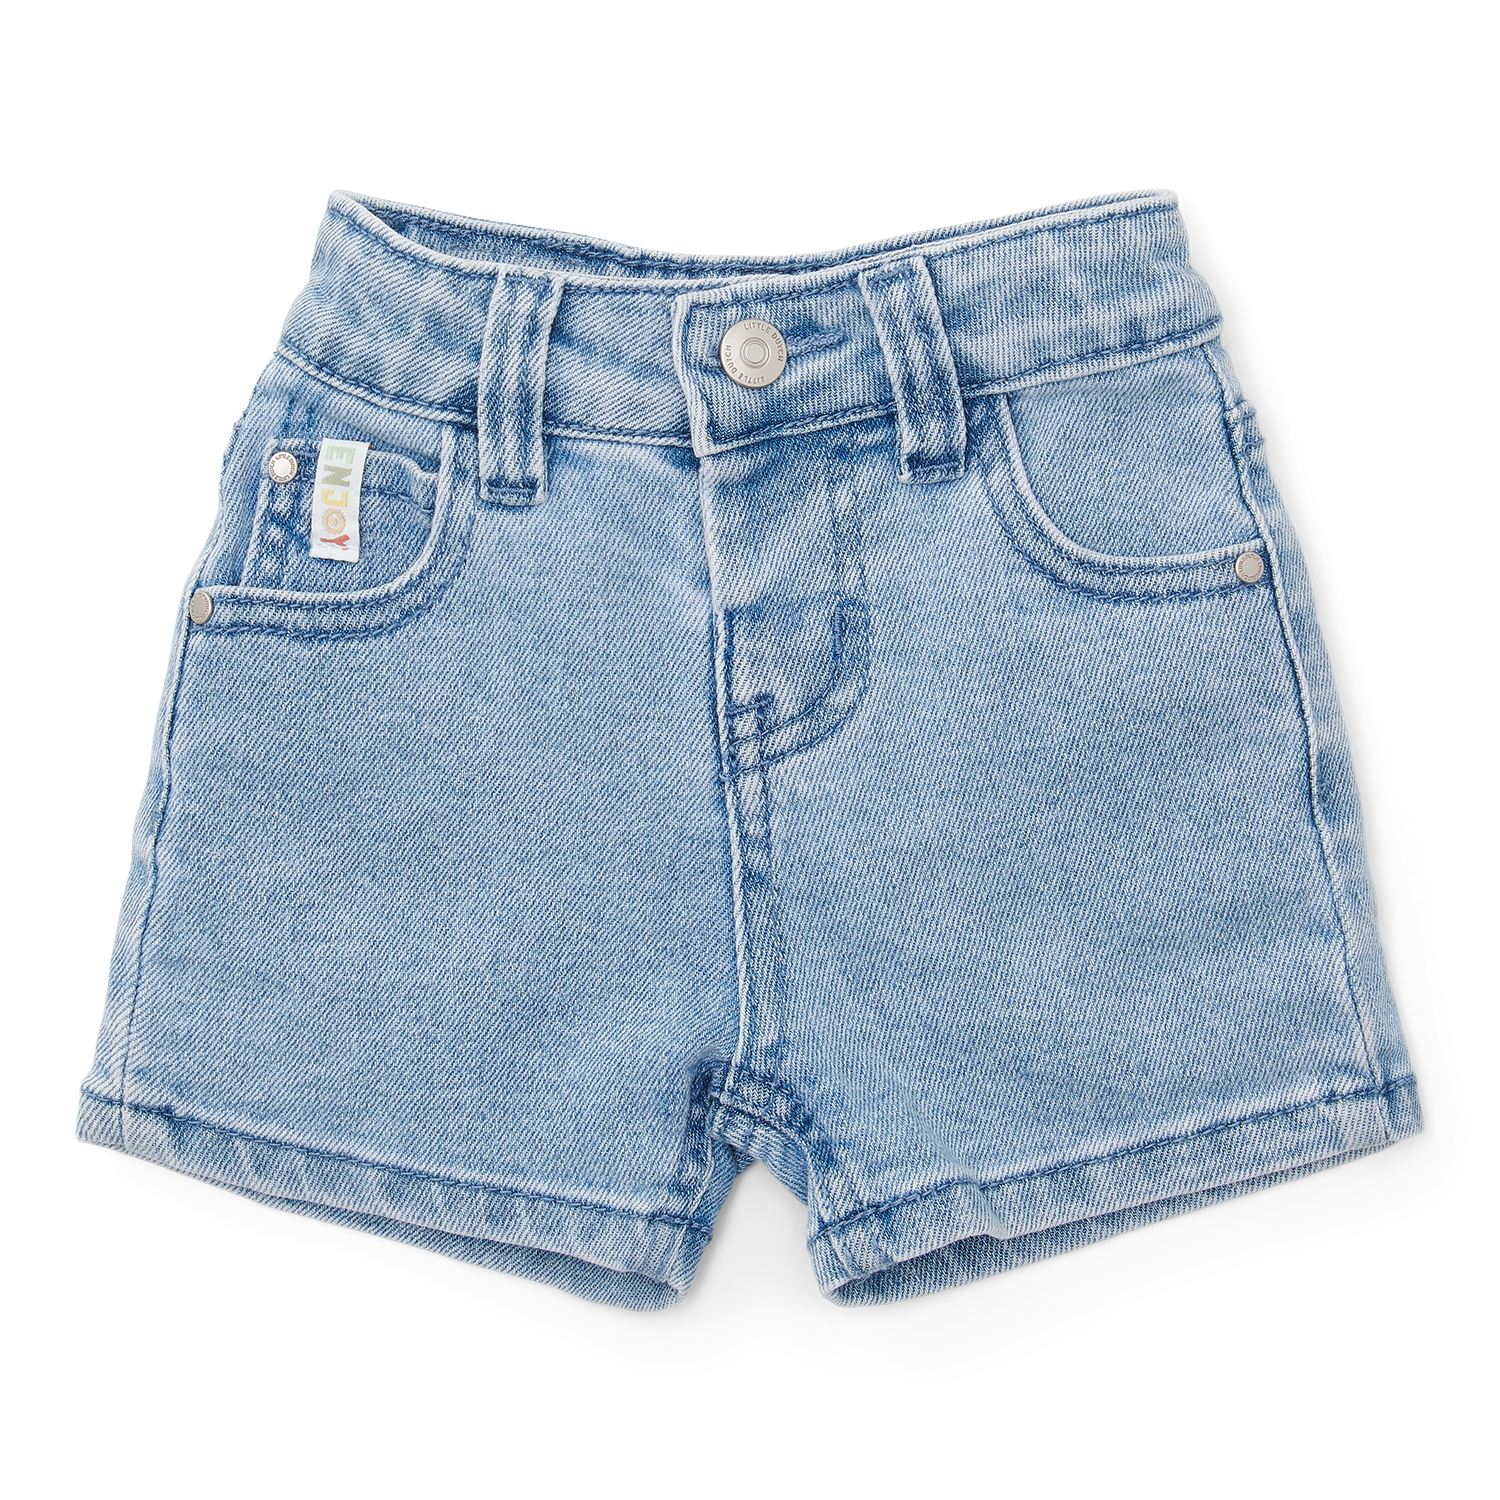 Kurze Hose / Shorts Denim mit Taschen Little Farm jeans (Gr. 104)